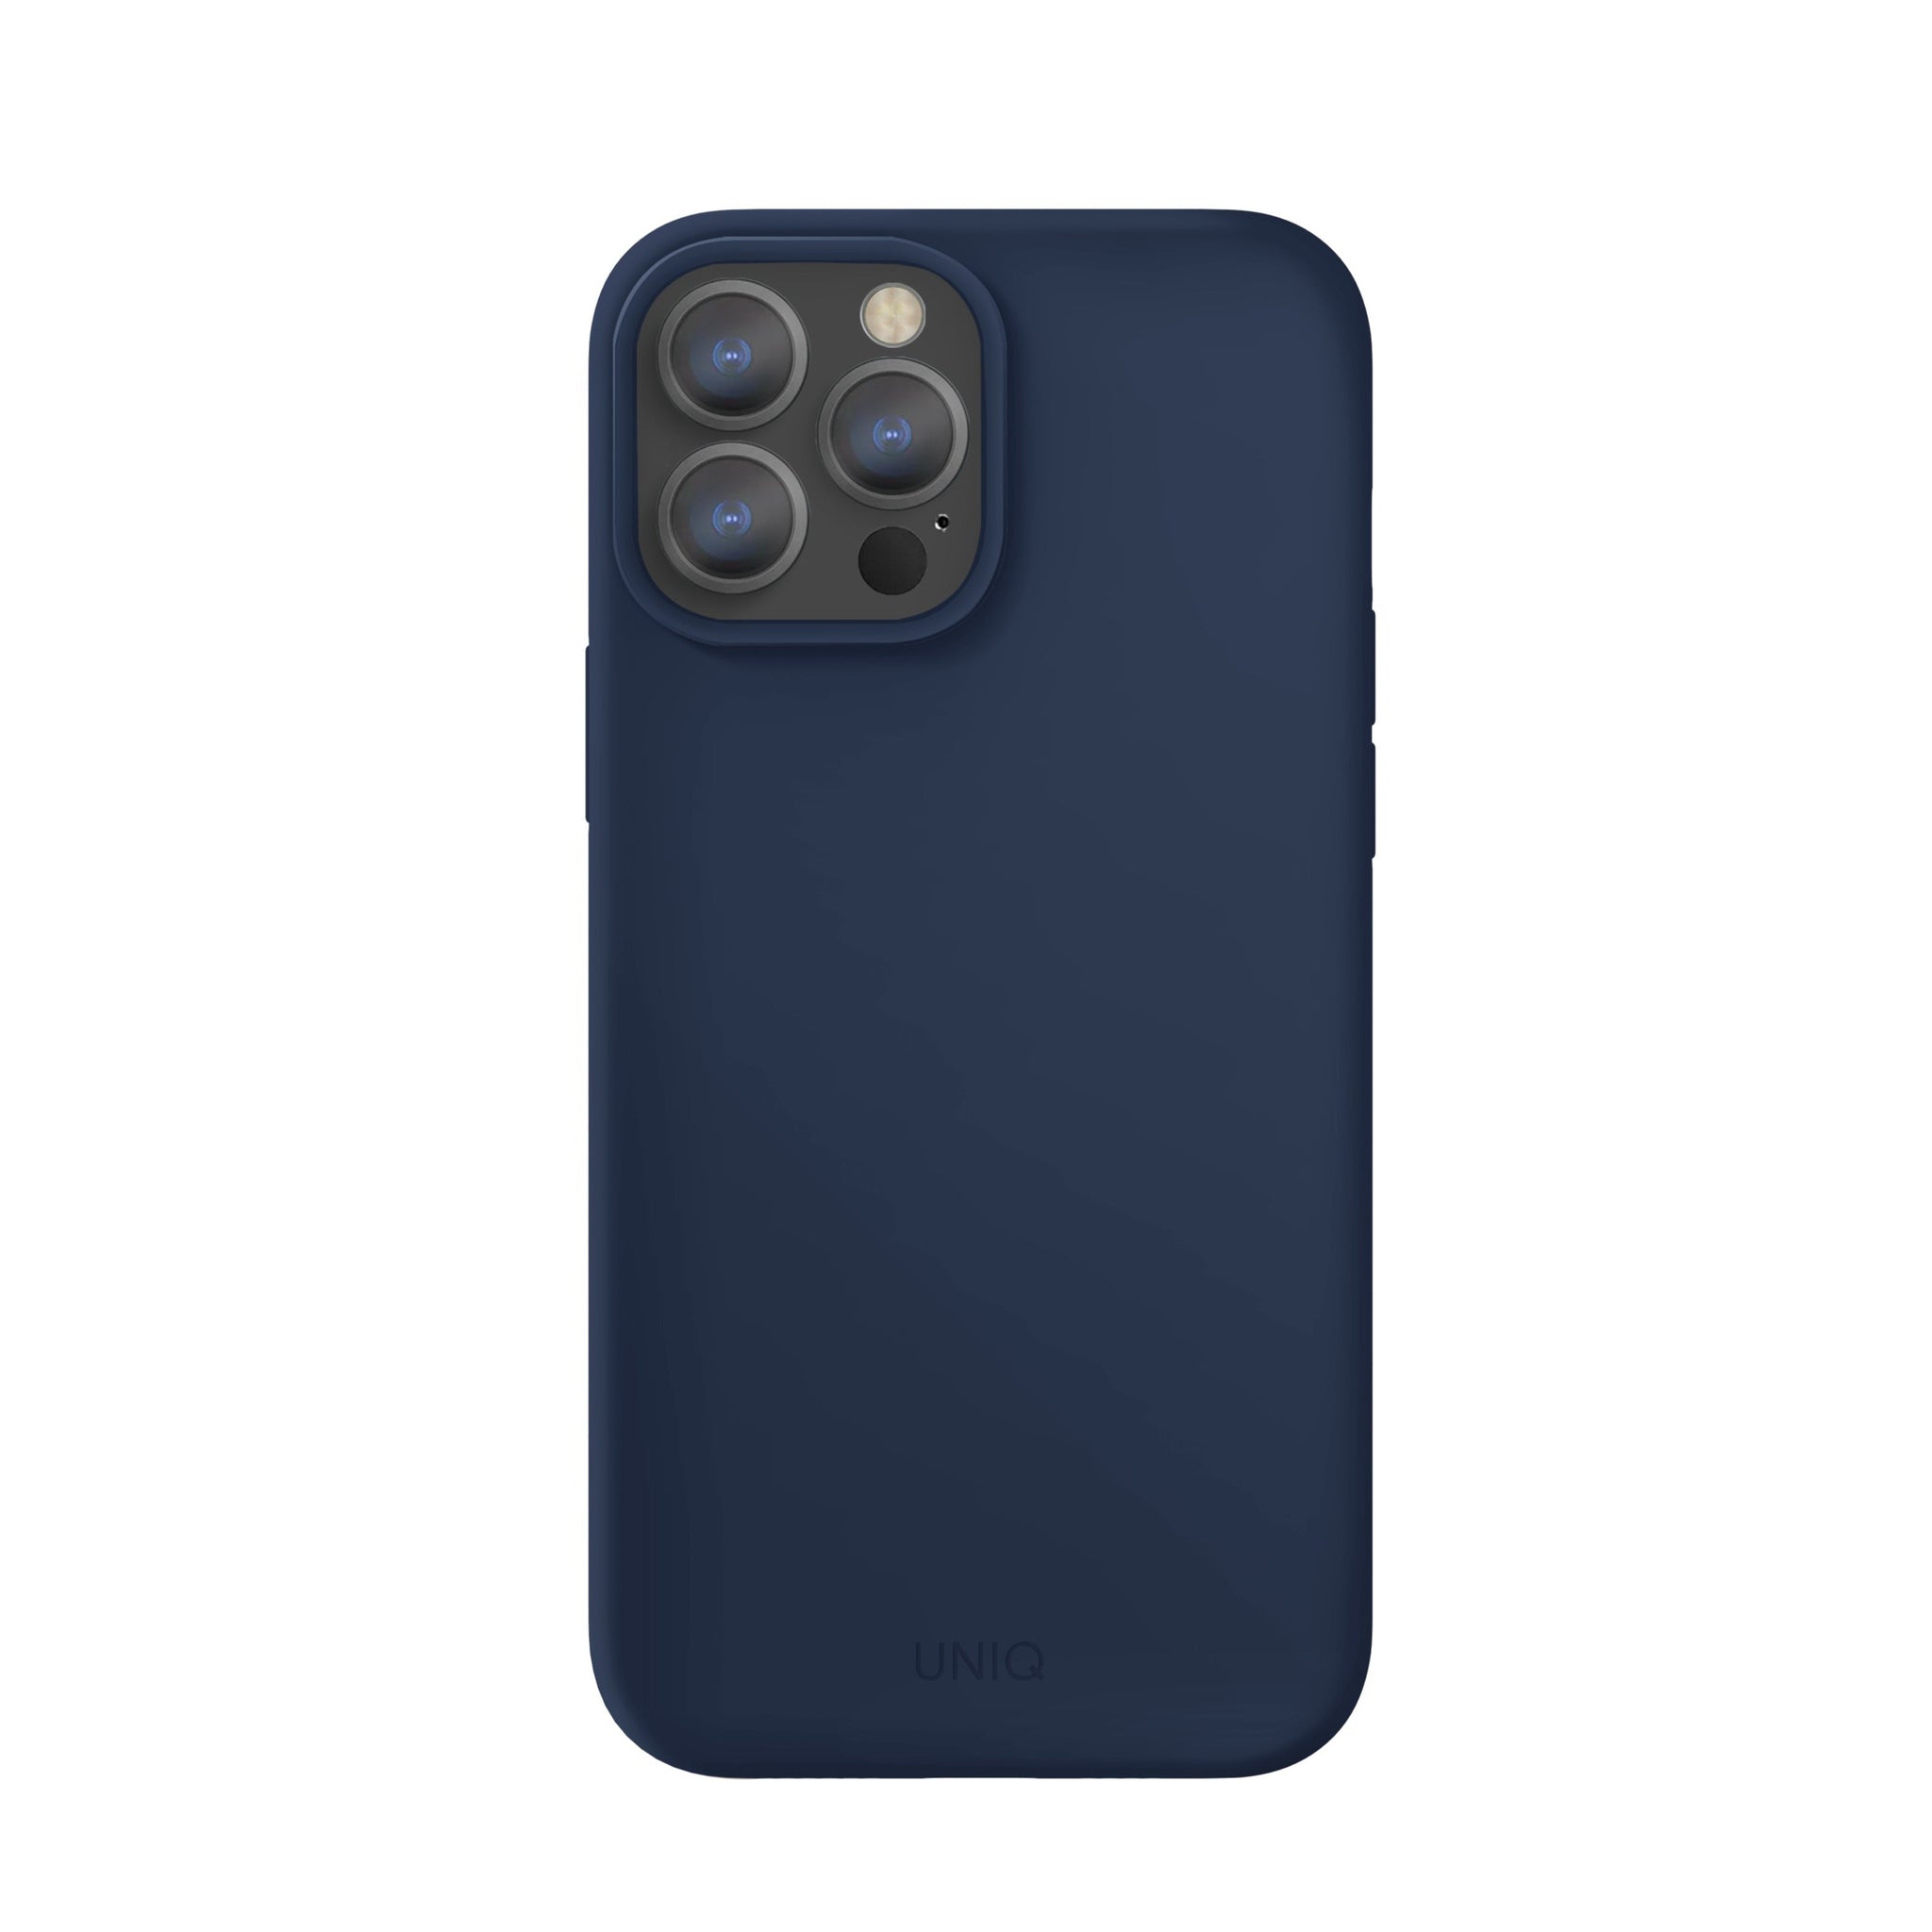 Uniq Iphone 13 Pro Max Hybrid Lino Mobile Cover / Case - MARINE (BLUE) - كفر سليكون من شركة يونيك